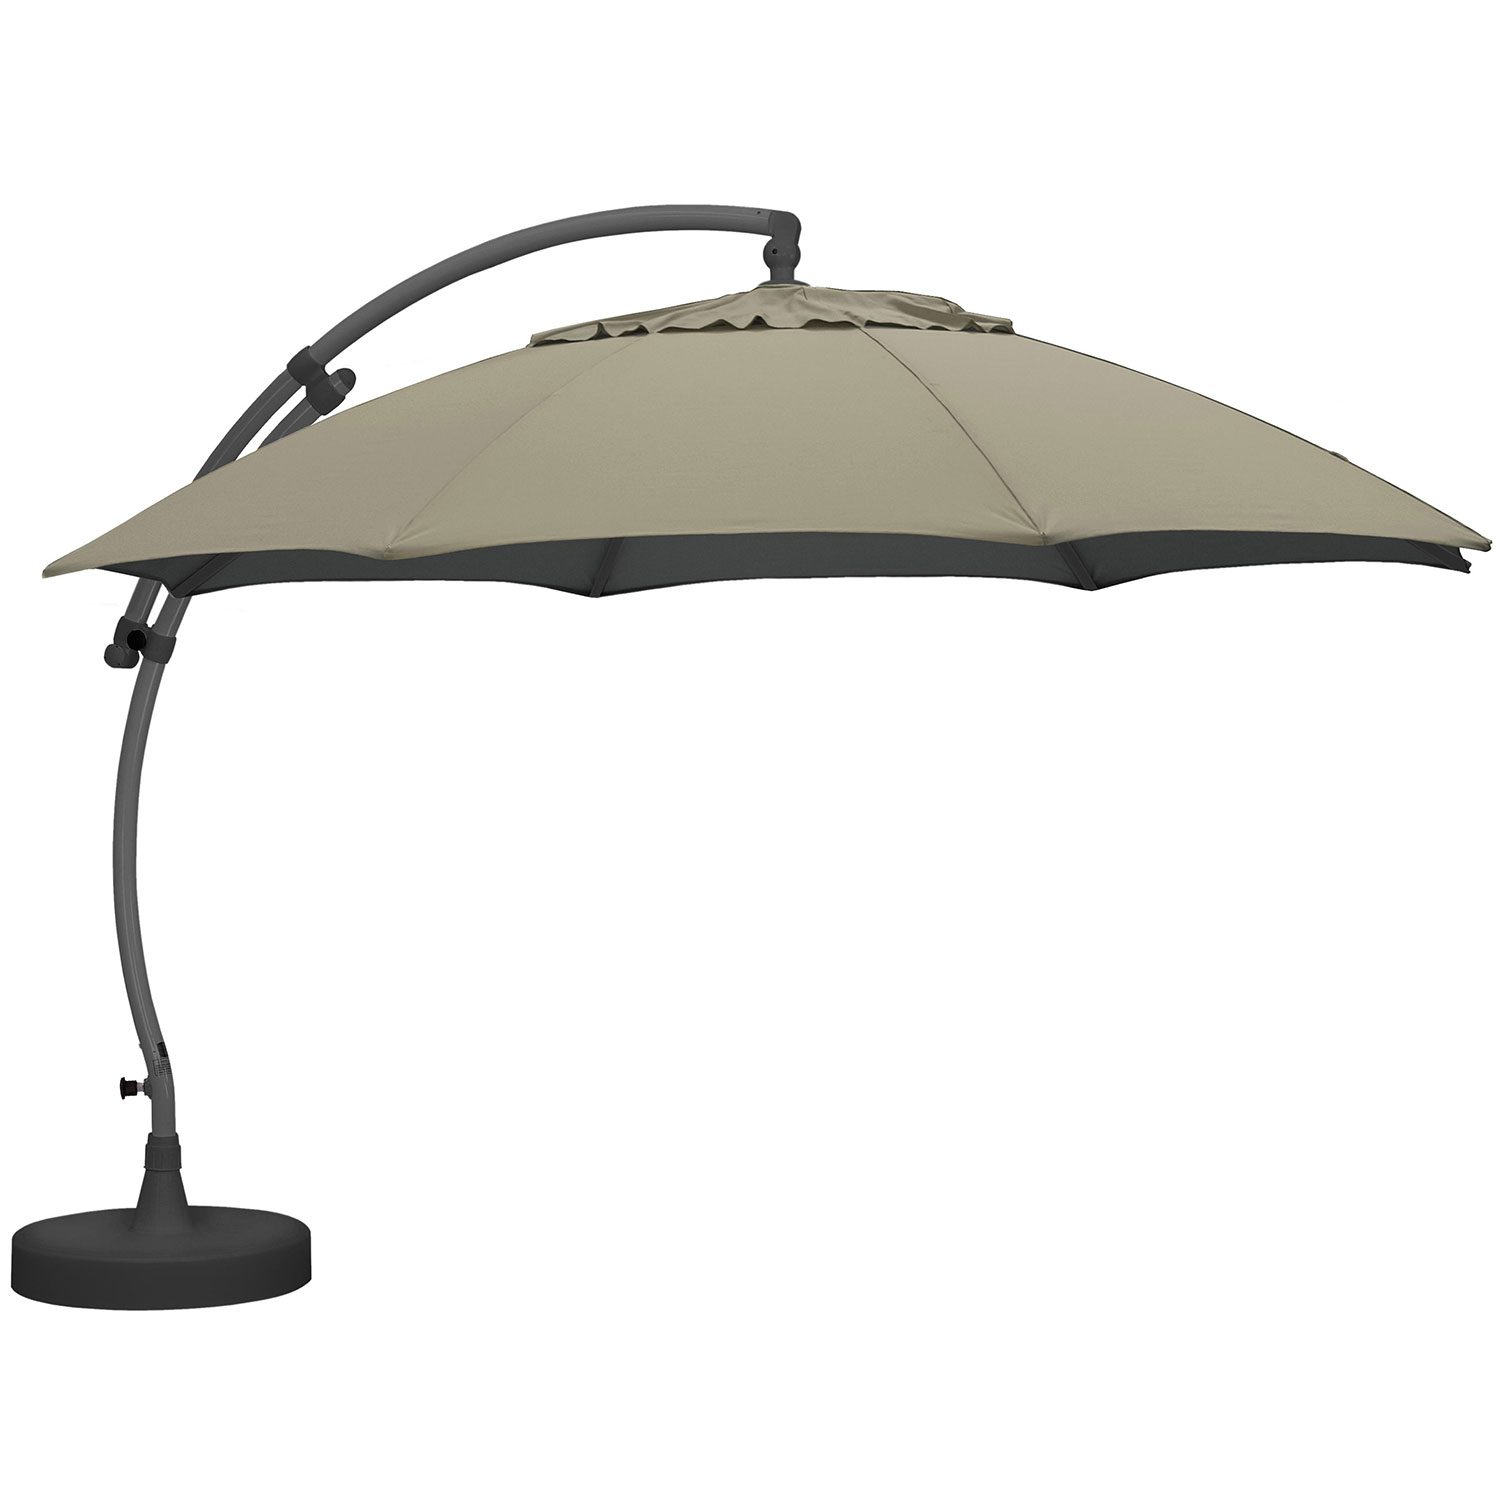 Easy Sun frihängande parasoll antracit/sand Ø375 cm